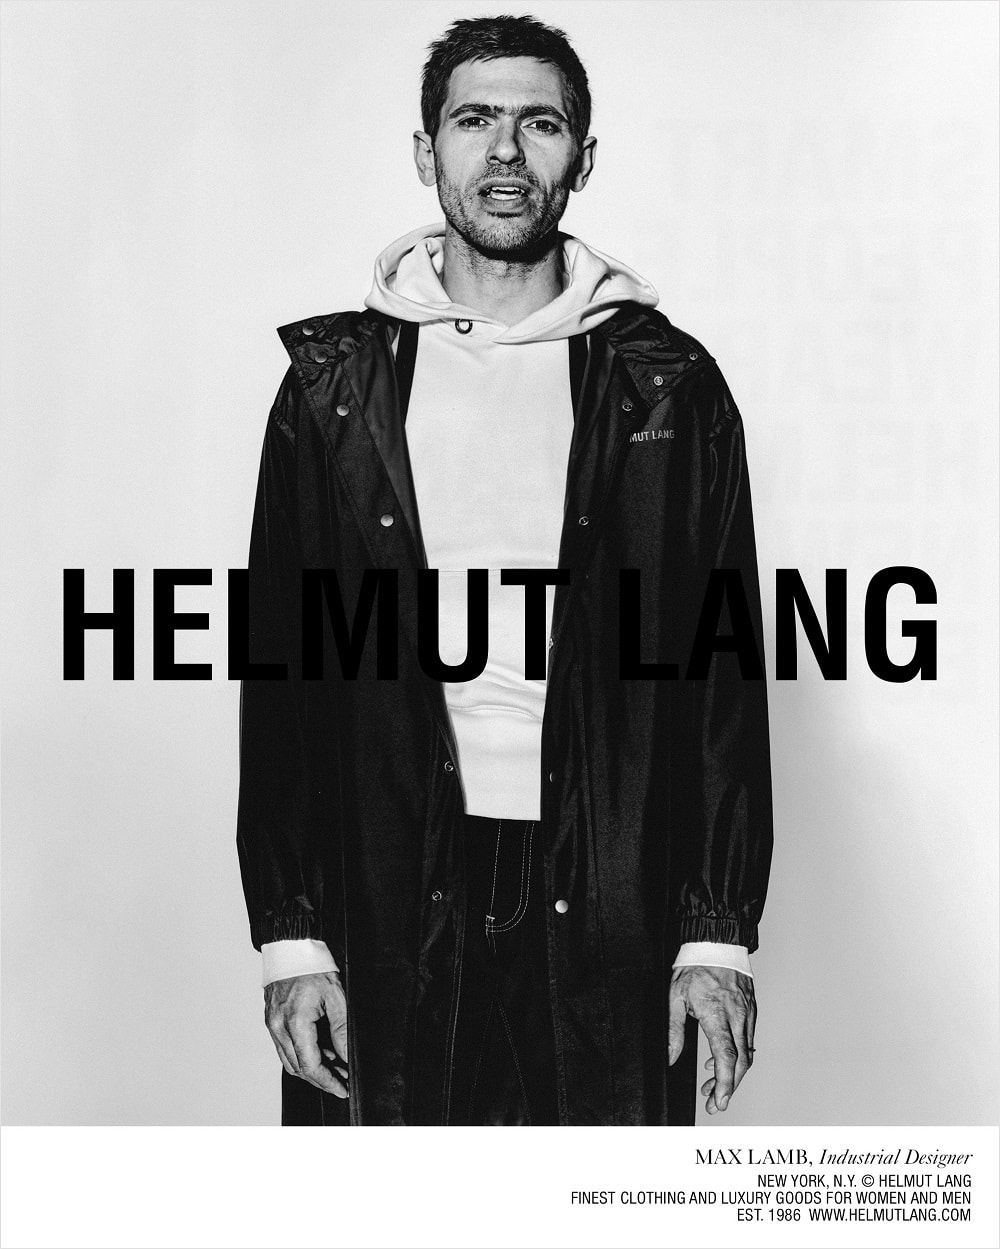 Industrial Designer Max Lamb by Richard Burbridge for Helmut Lang Fall 2018 Ad Campaign